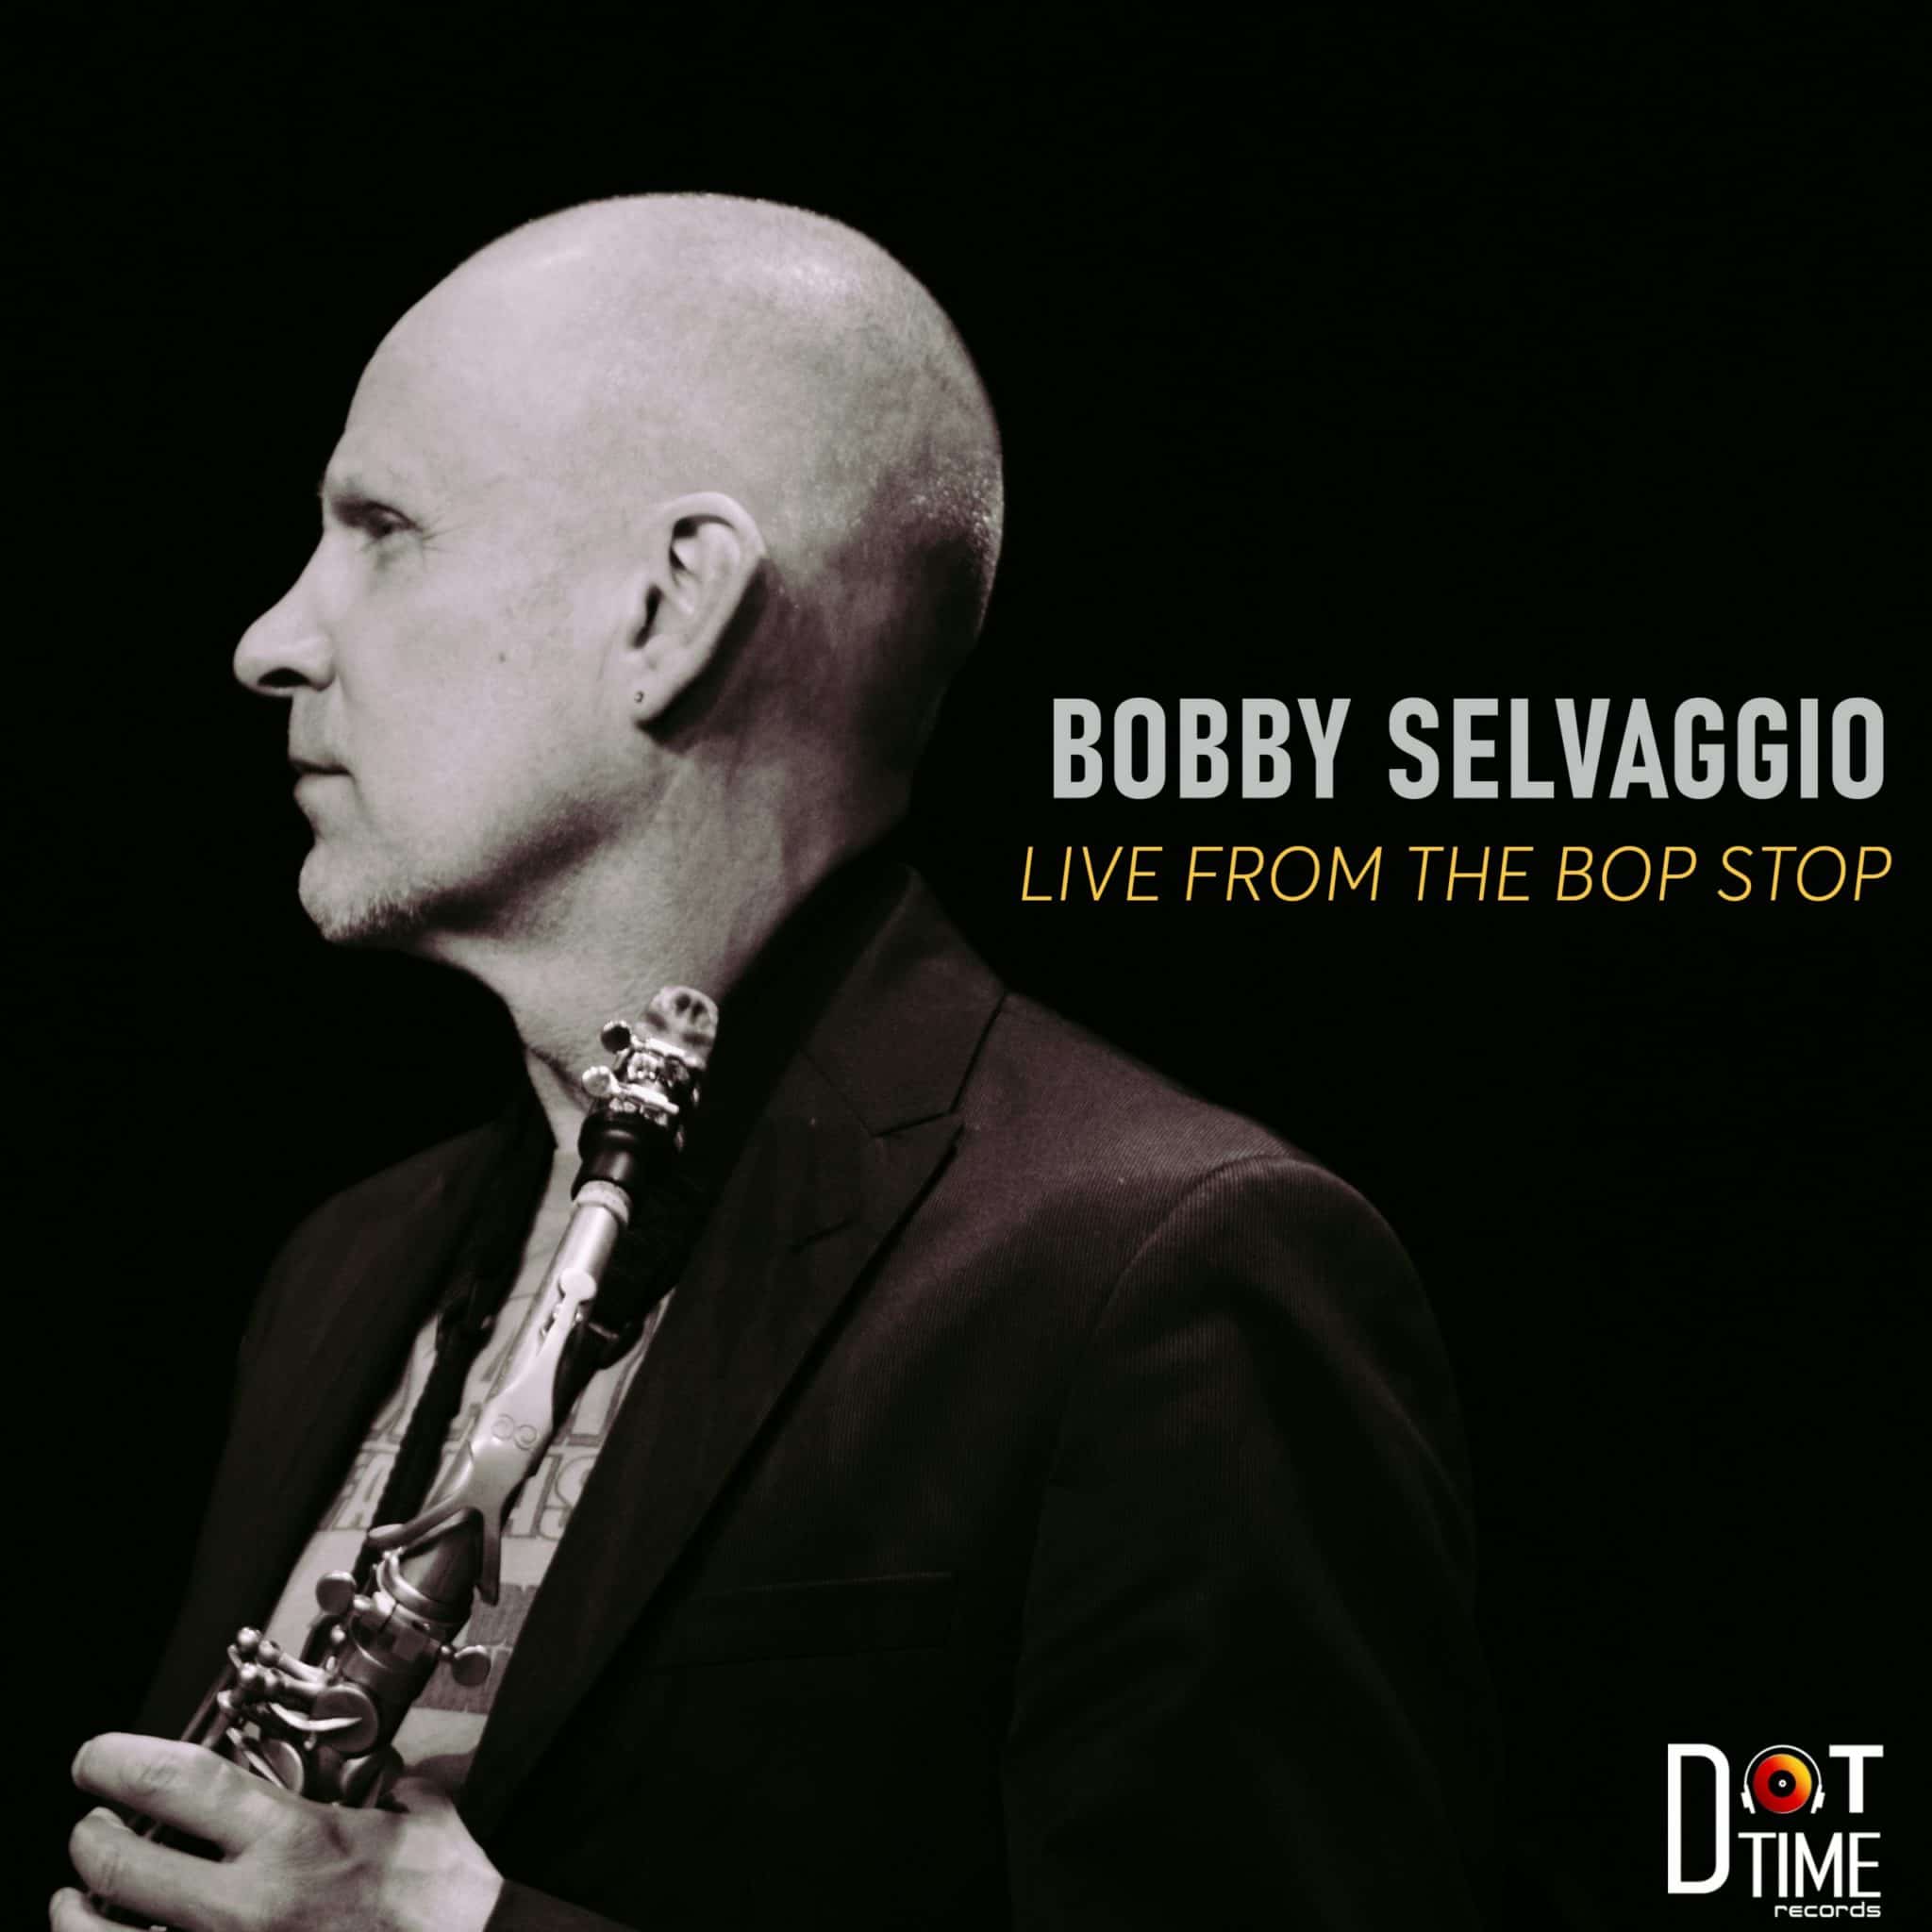 Bobby-Salvaggio-Cover-3000x3000-1-scaled